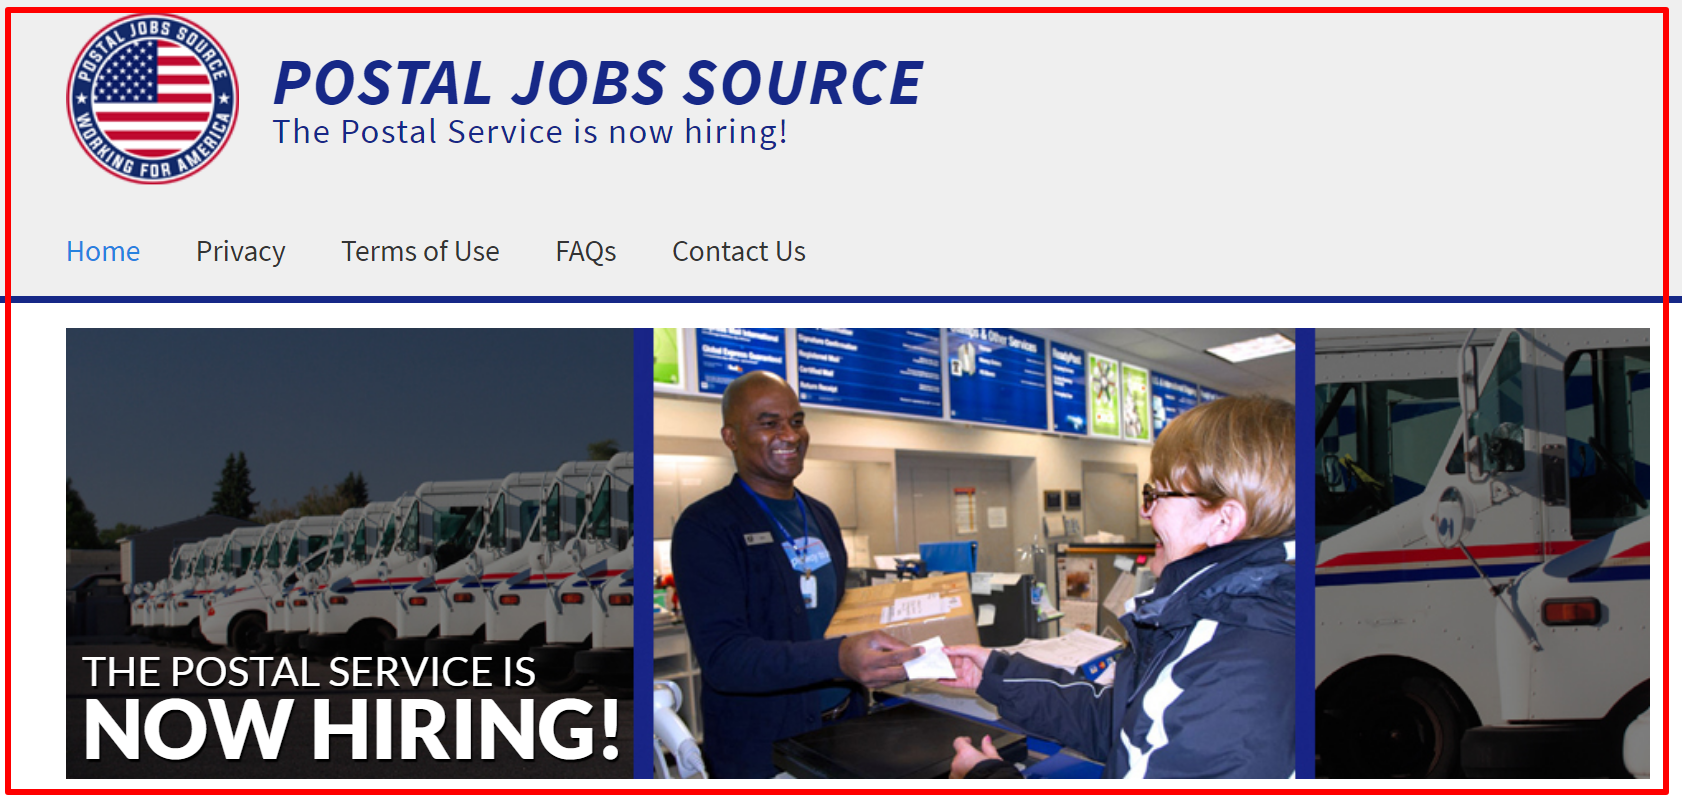 Postal Service Jobs Postal Jobs Source (2) Advantage Affiliates